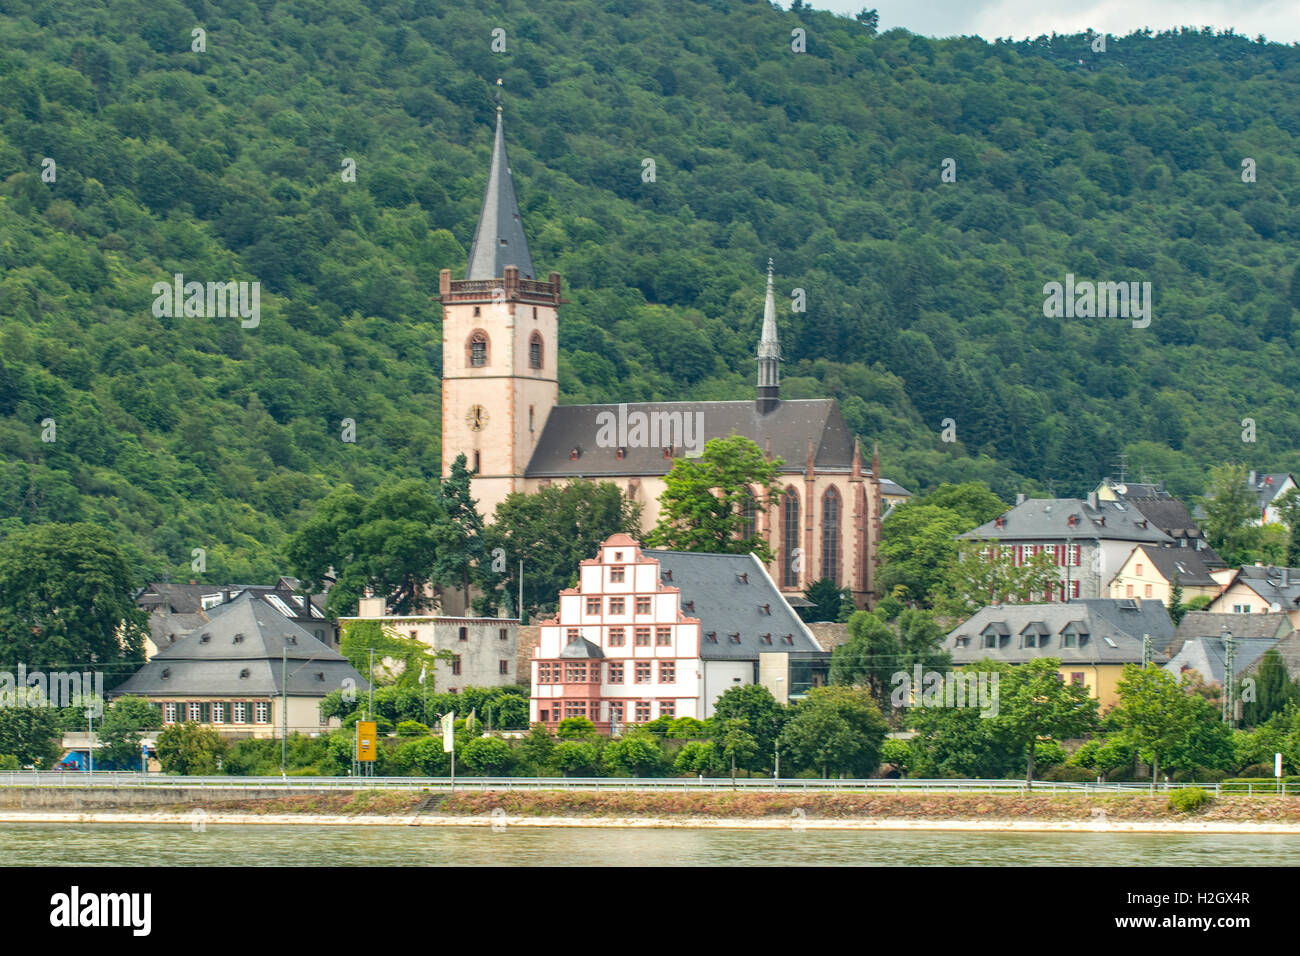 St Peters Kirche, Bacharach am Rhein, Allemagne Banque D'Images